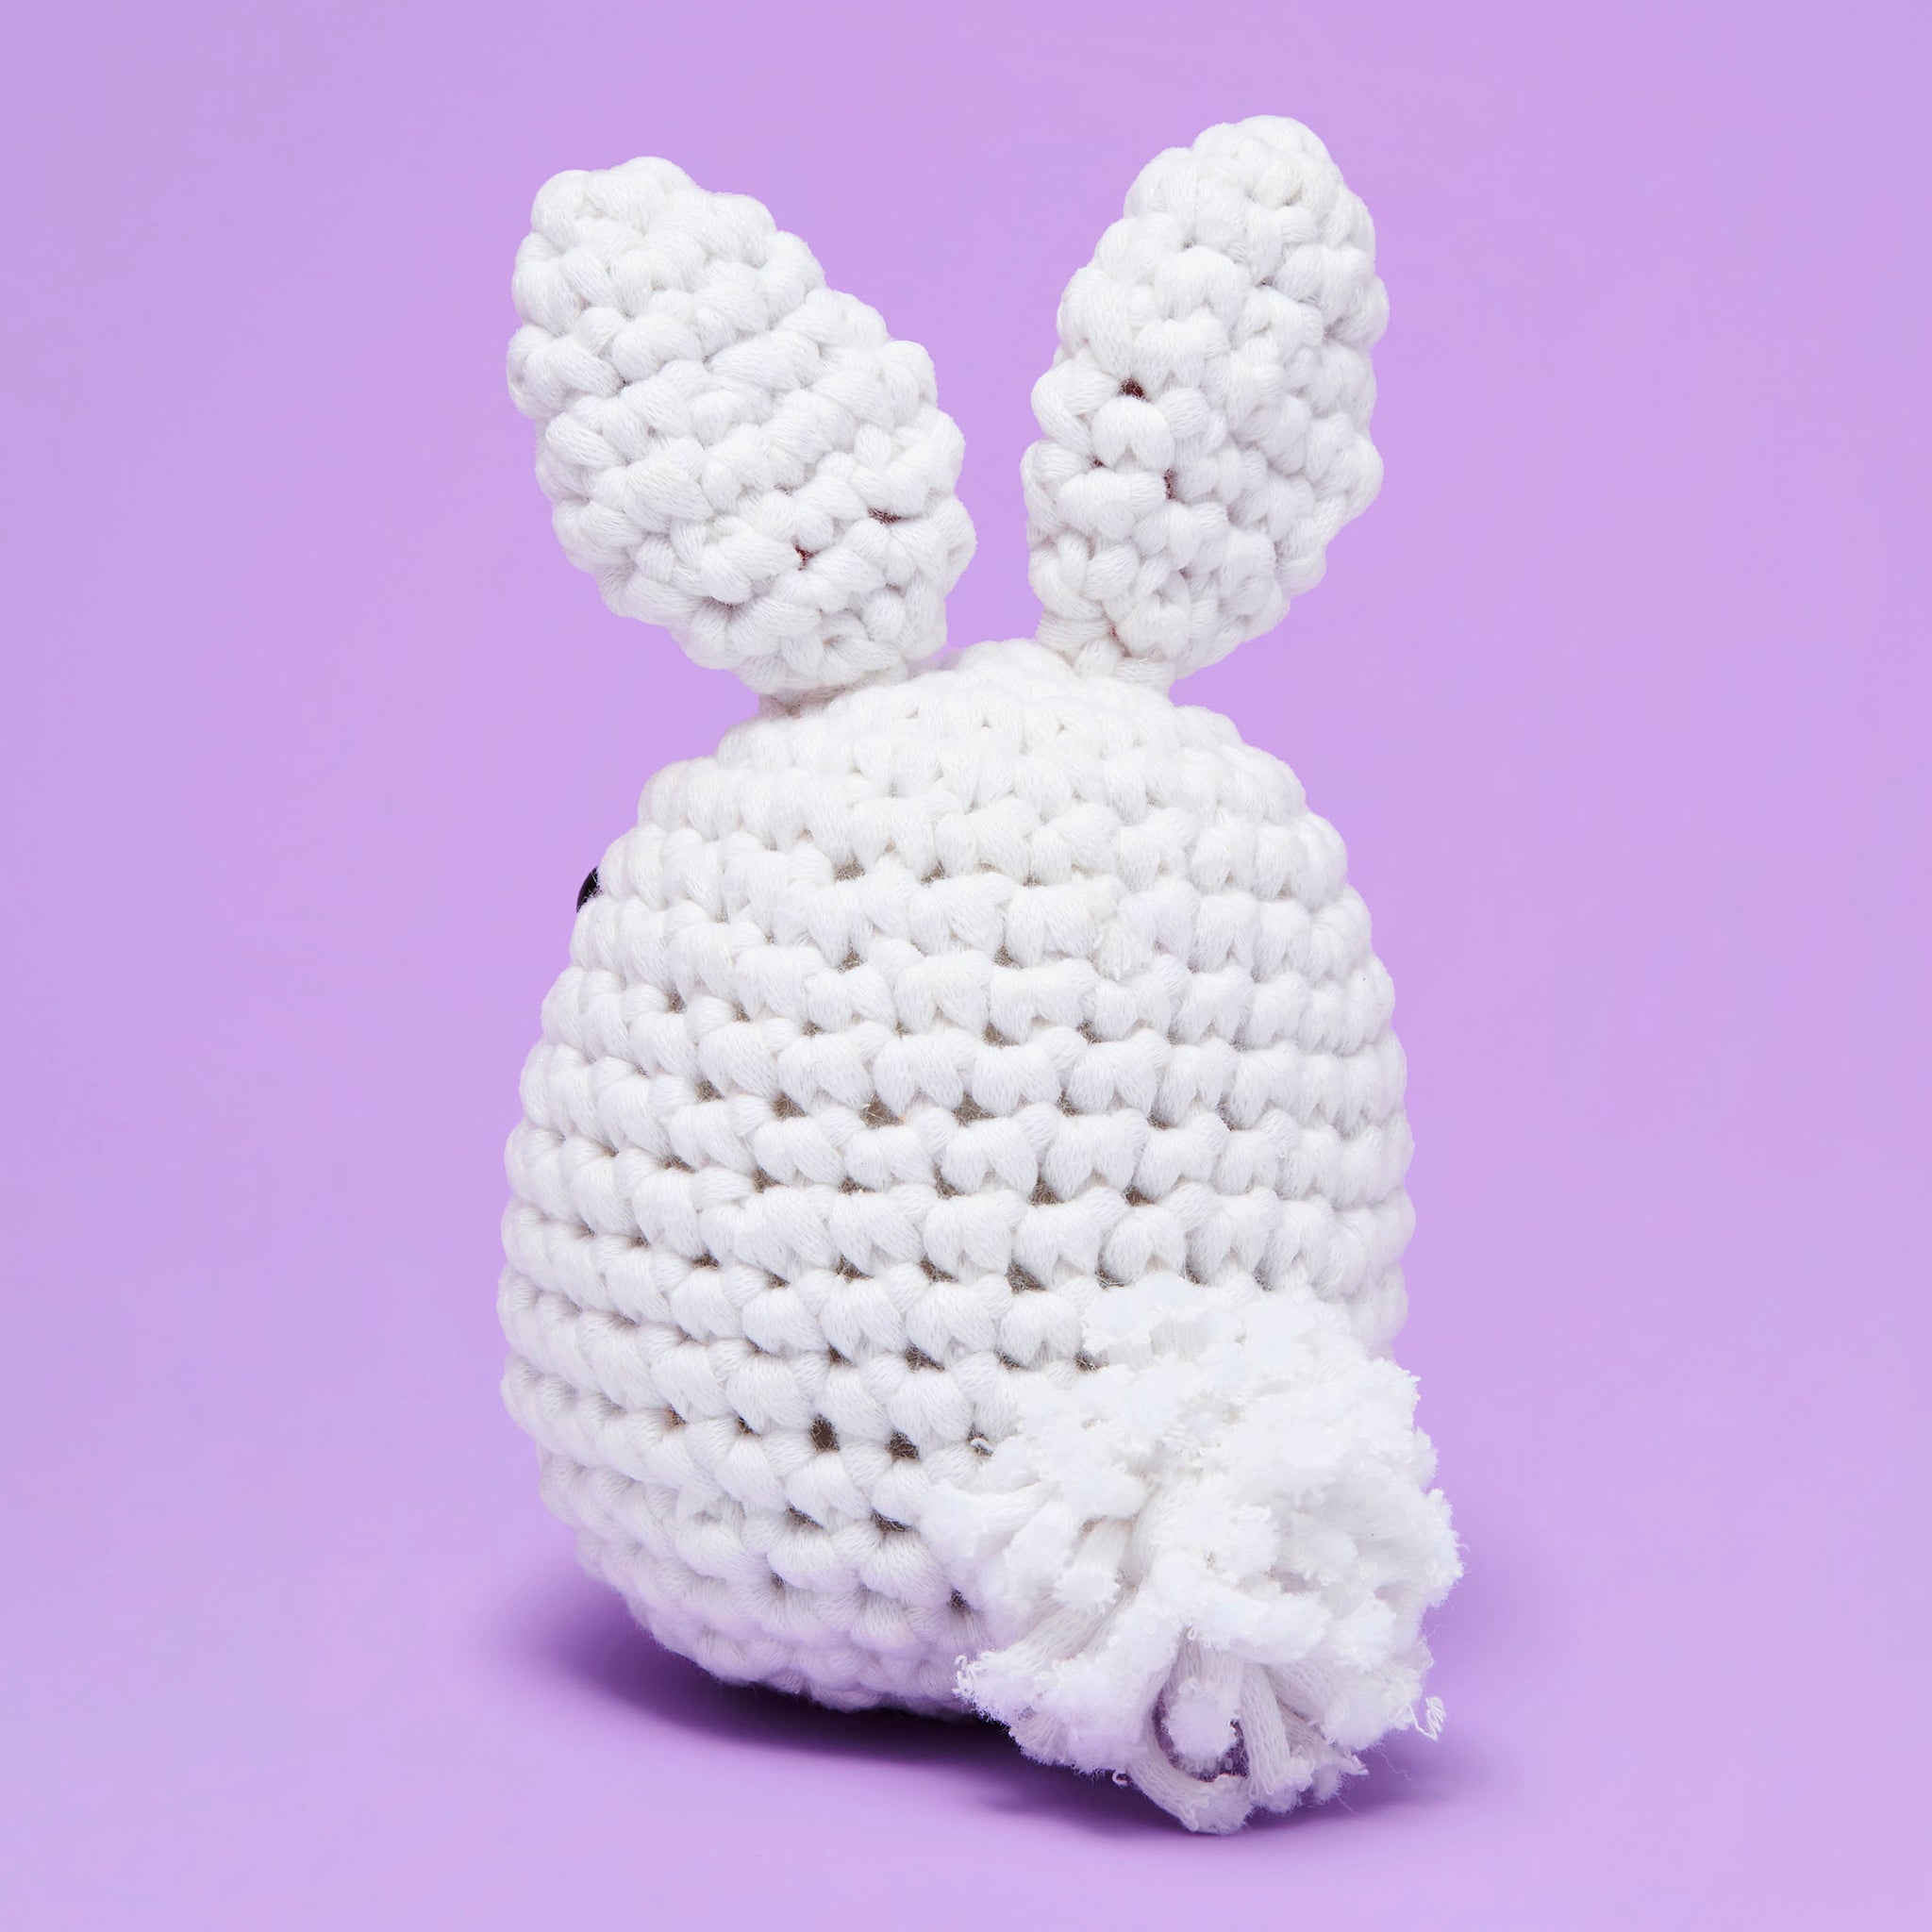 Mable Bunny Crochet Kit. Amigurumi Bunny Rabbit. Crochet Pattern. Animal  Crochet Kit. Easy Crochet Kit. Baby Shower Gift. 